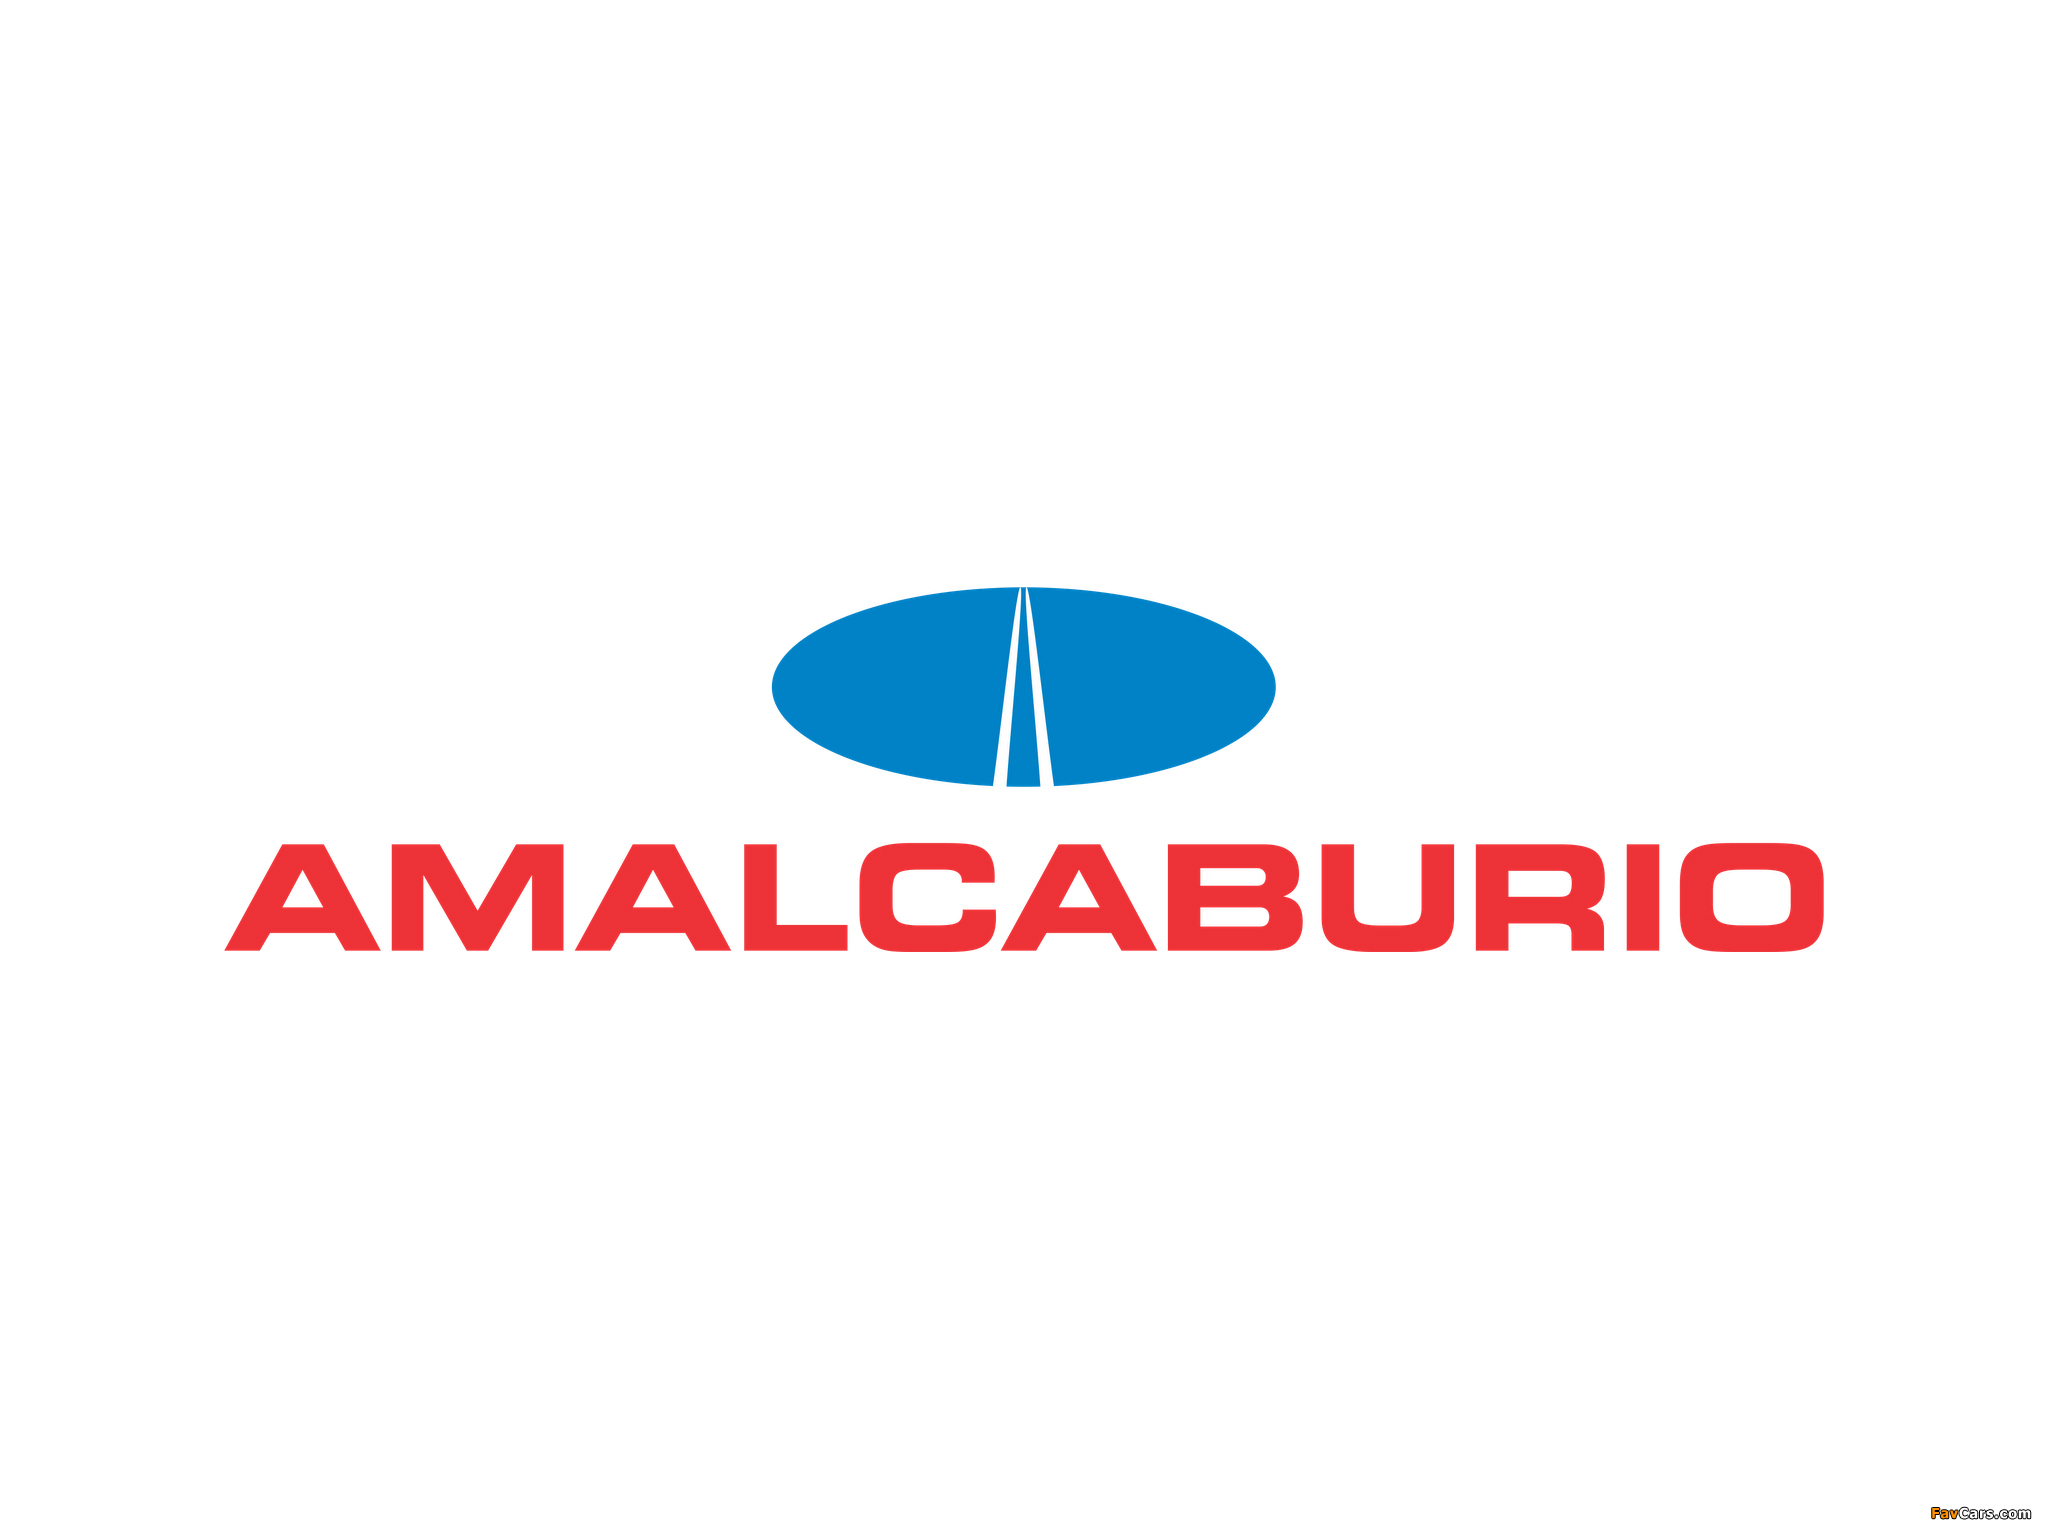 Amalcaburio images (2048 x 1536)